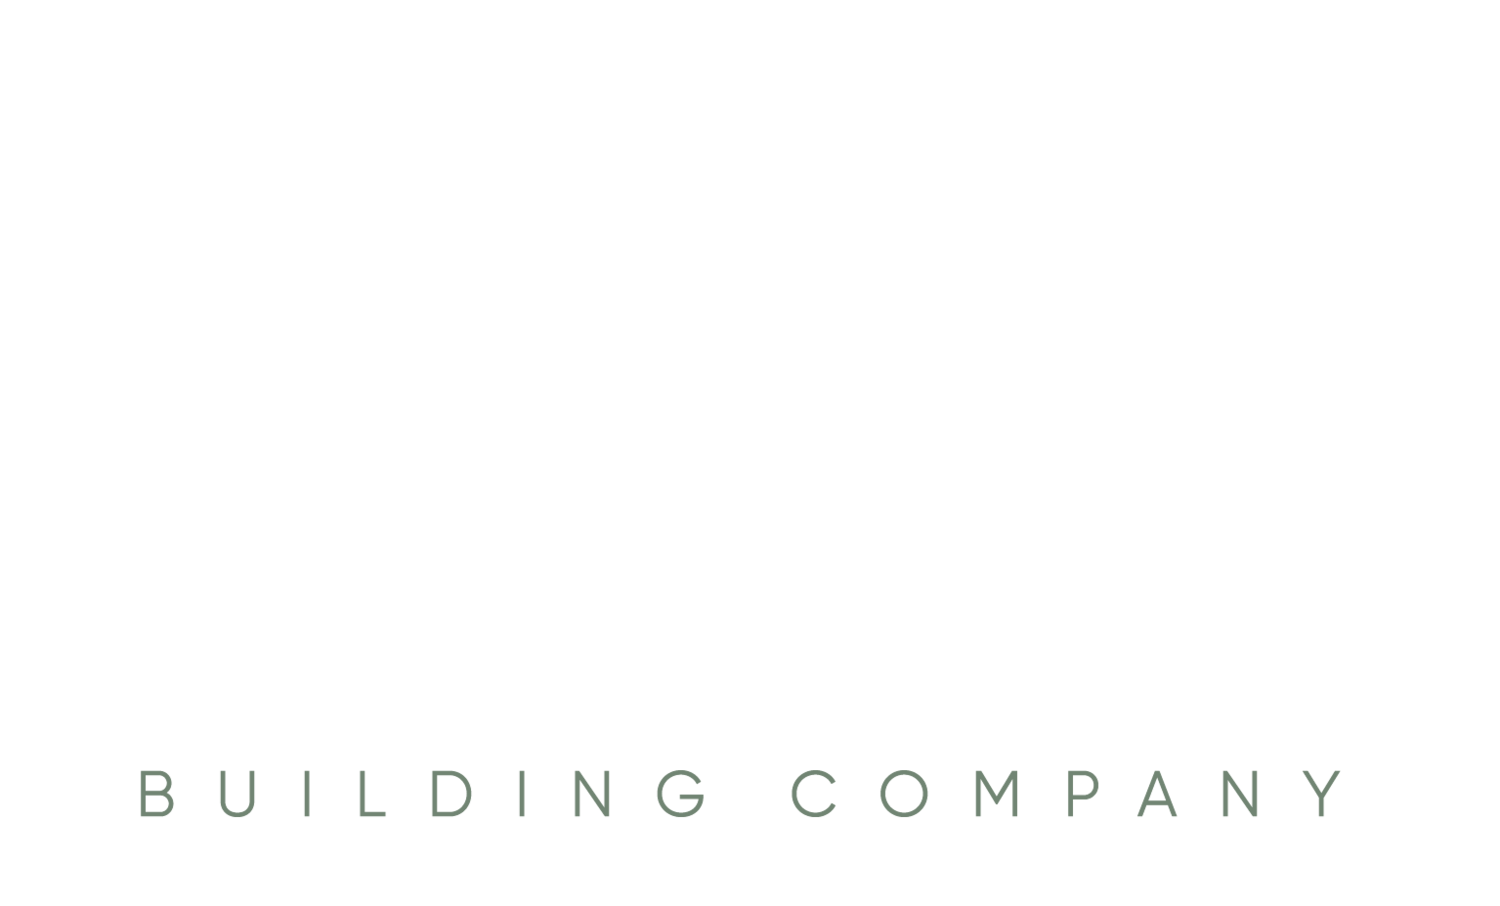 35 SOUTH  BUILDING COMPANY